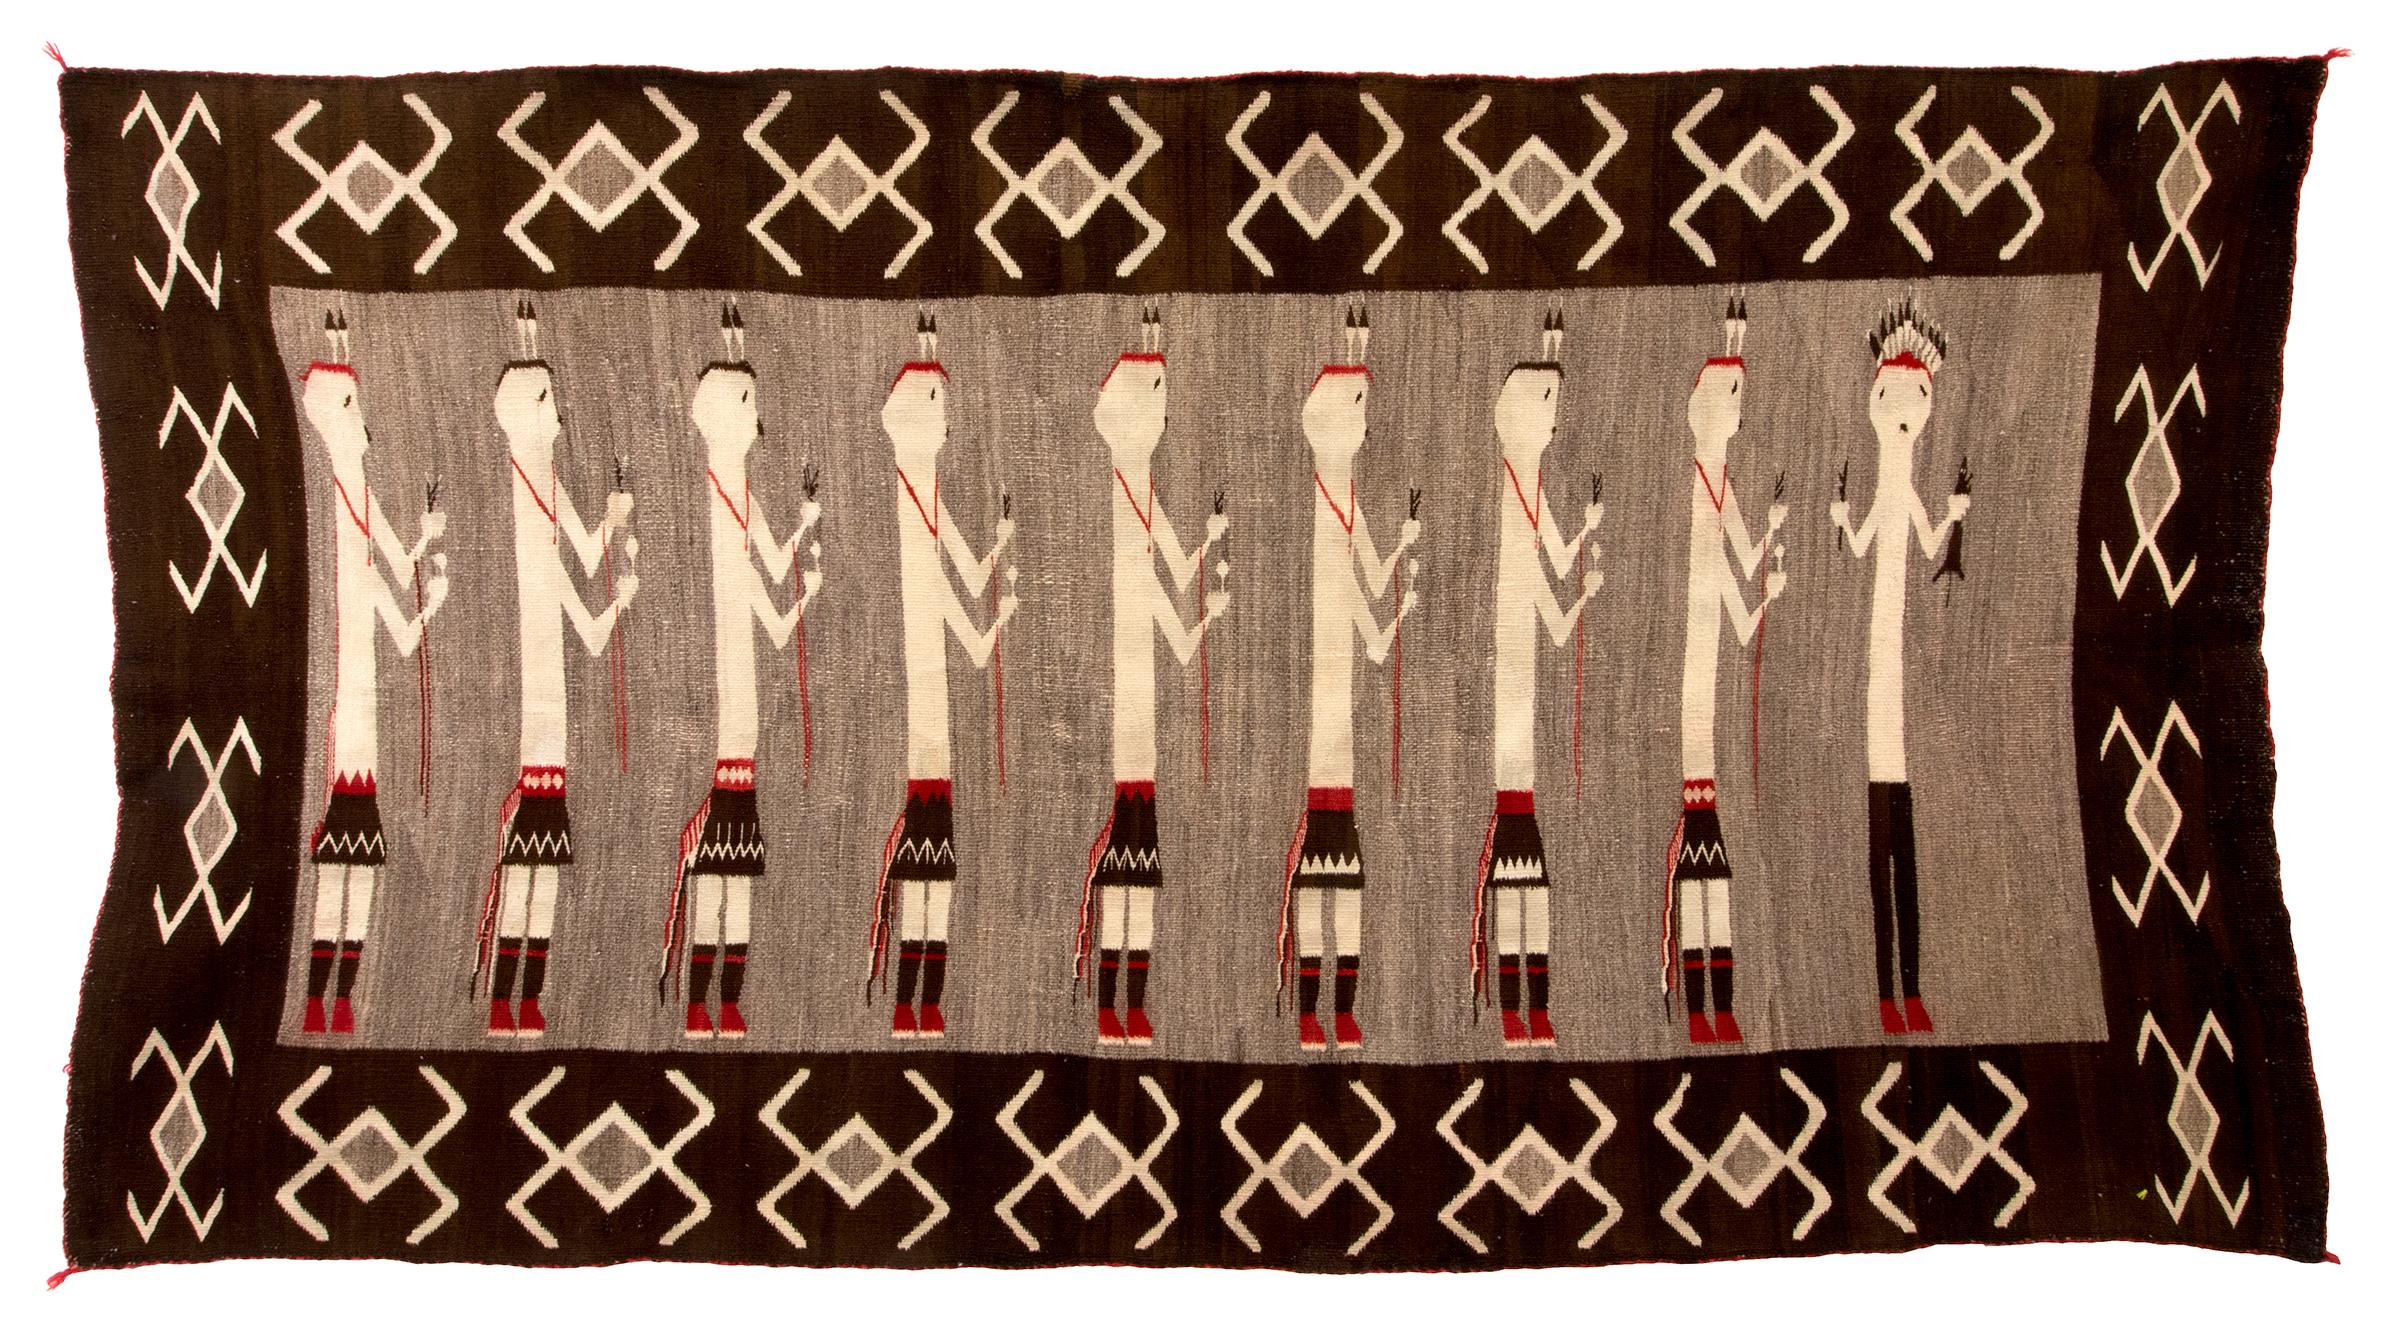 Native American Large Navajo Pictorial Yei Rug, Vintage circa 1930s, Brown Black Red White Gray